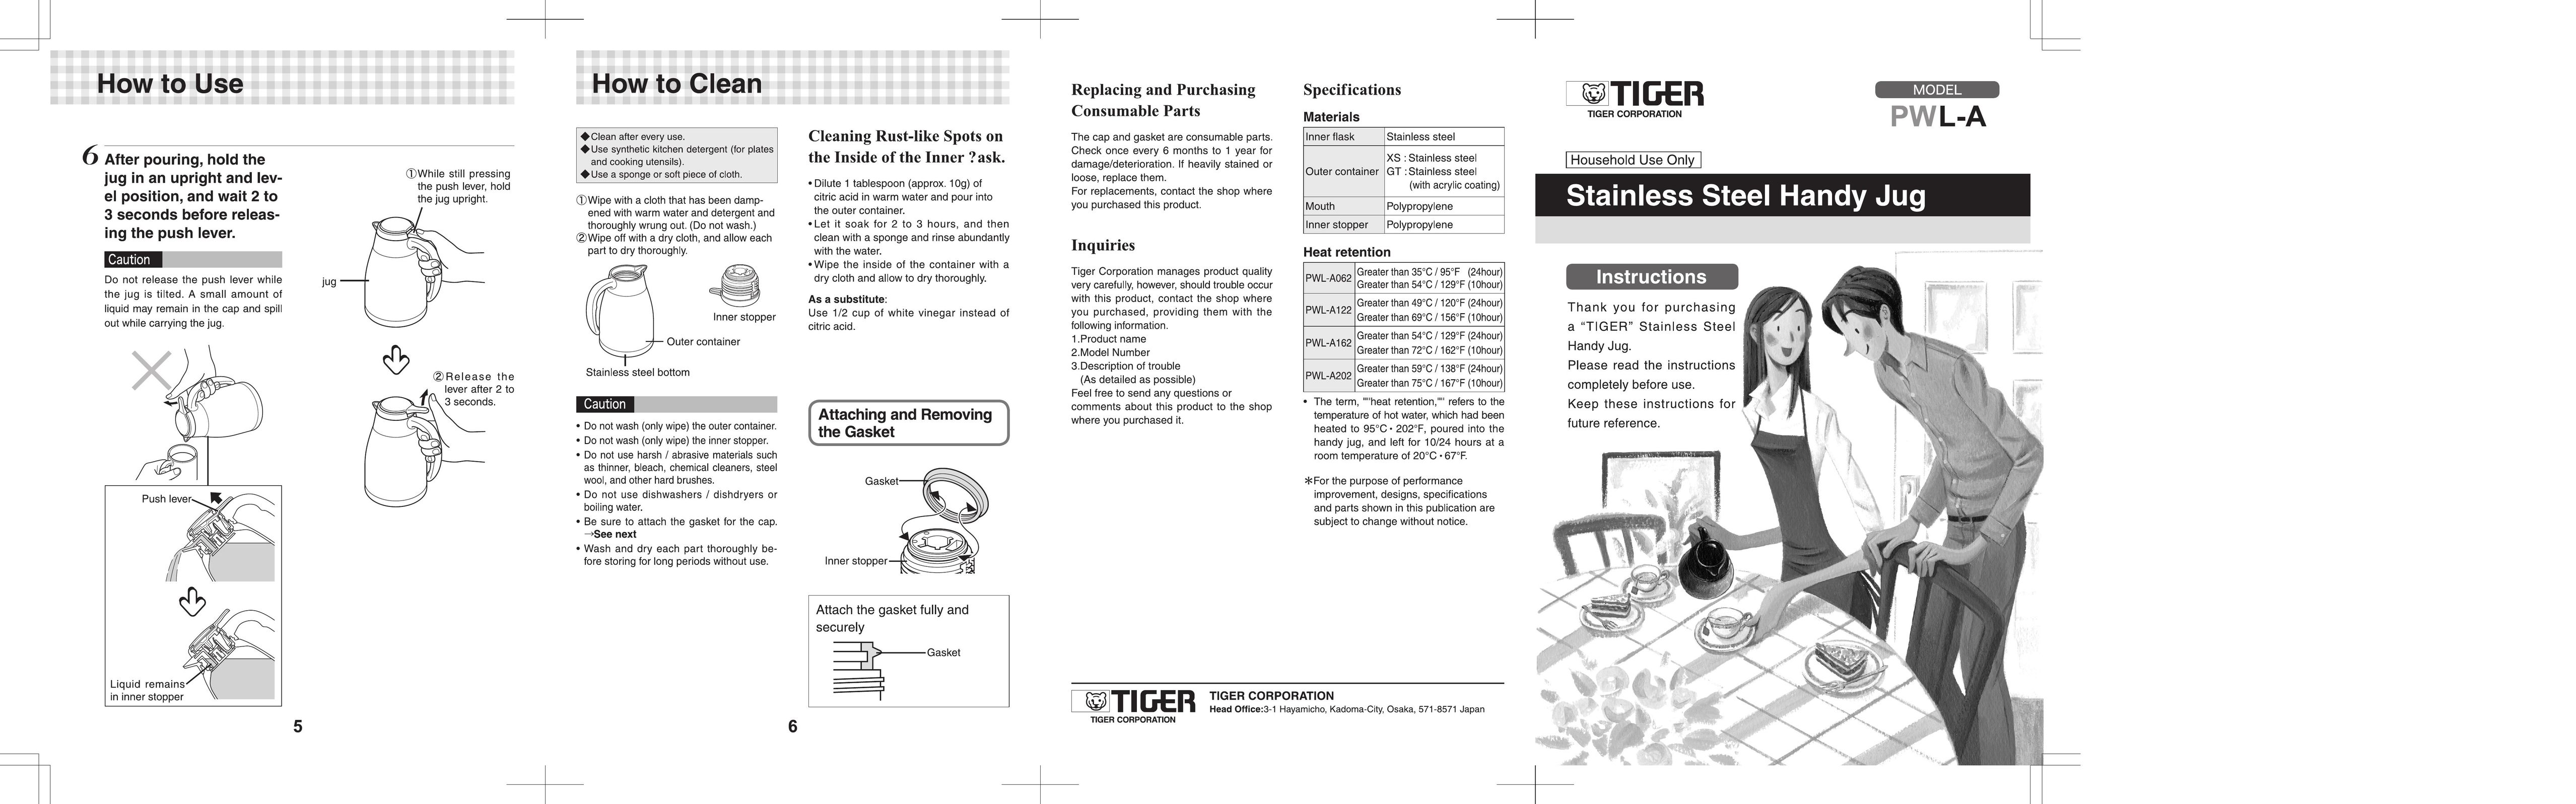 Tiger Products Co., Ltd PWL-A Blender User Manual